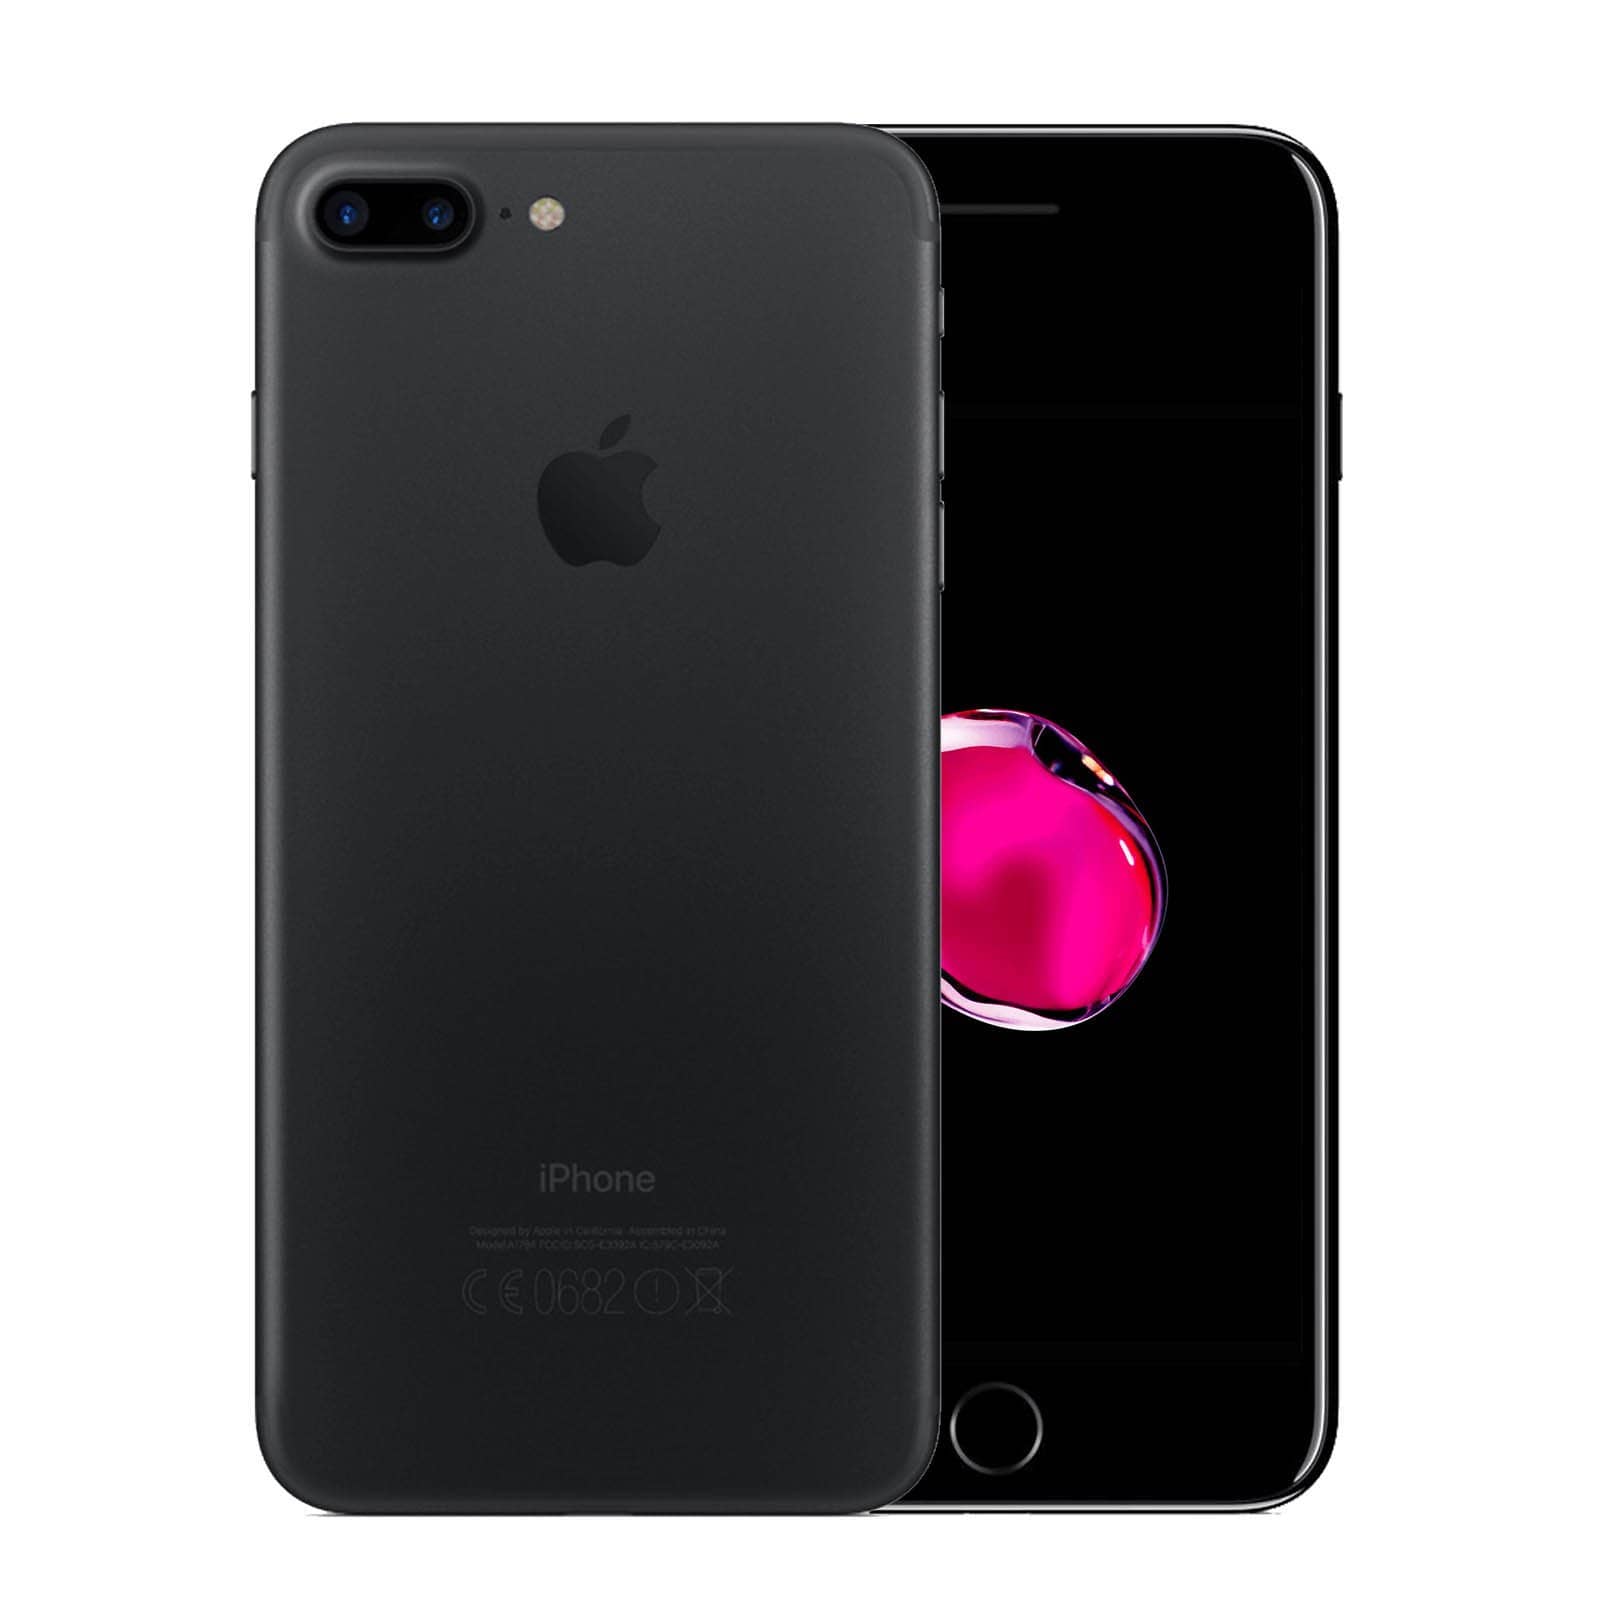 Apple iPhone 7 Plus 256GB Black Very Good - Unlocked